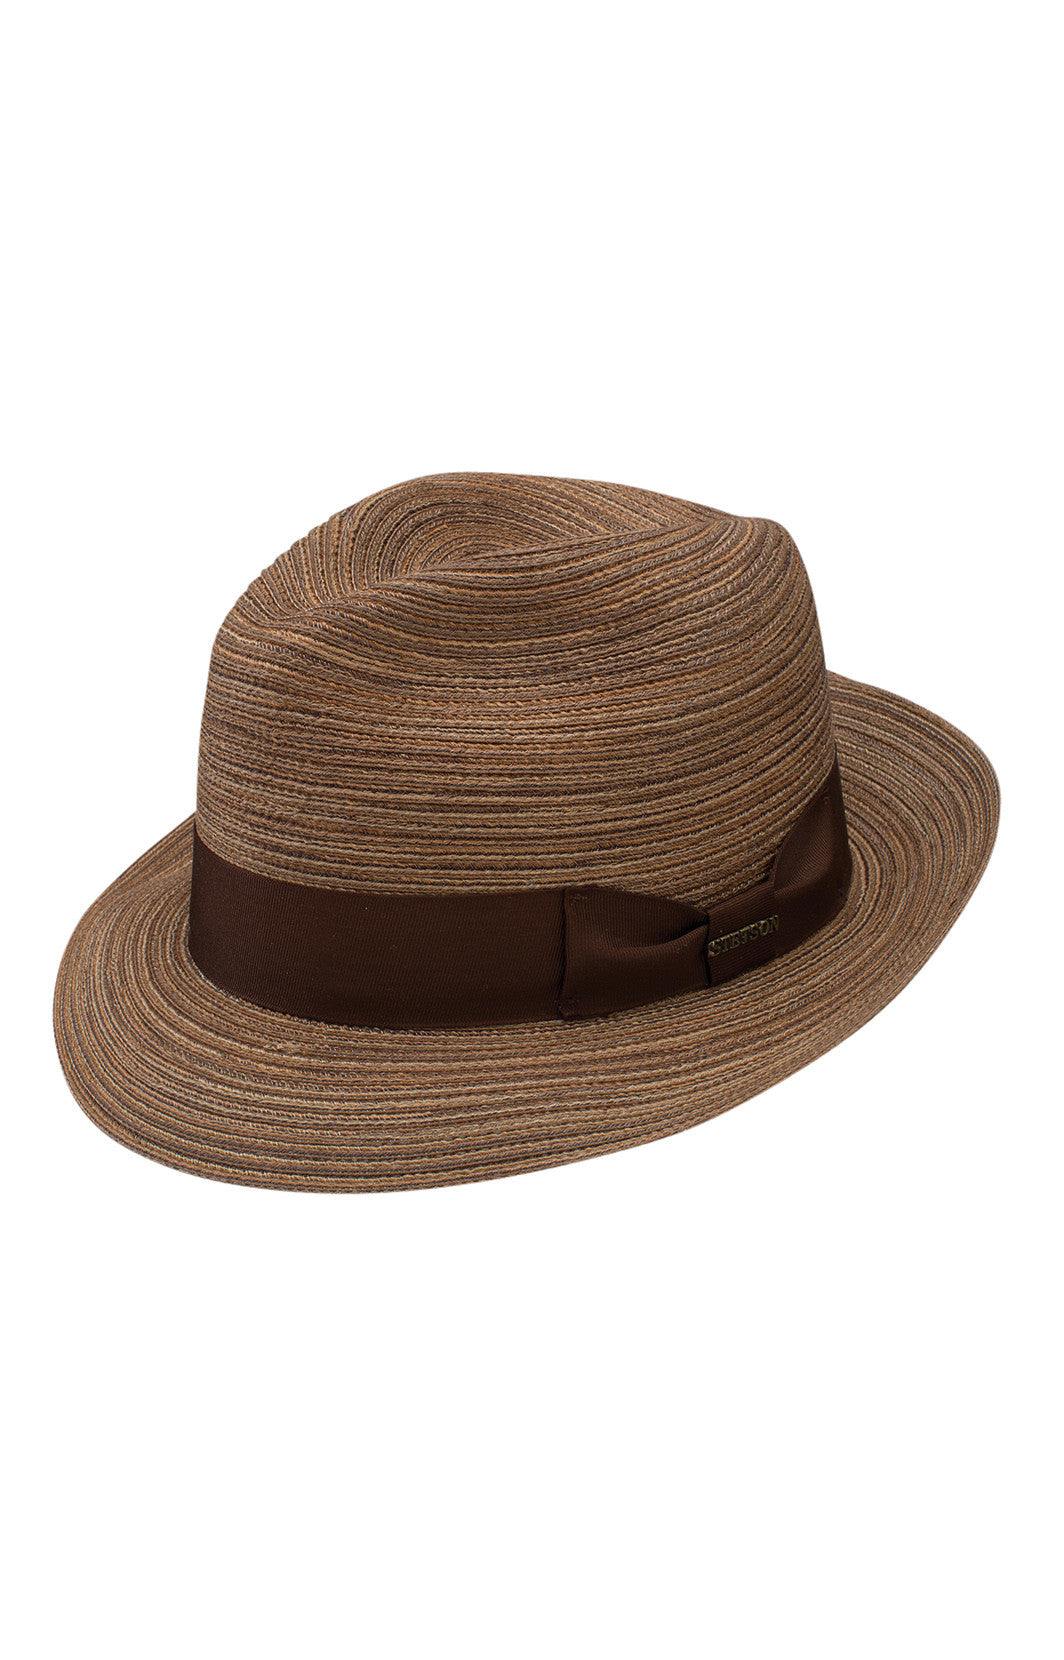 mens hats, straw hats, stetson hats, summer hat